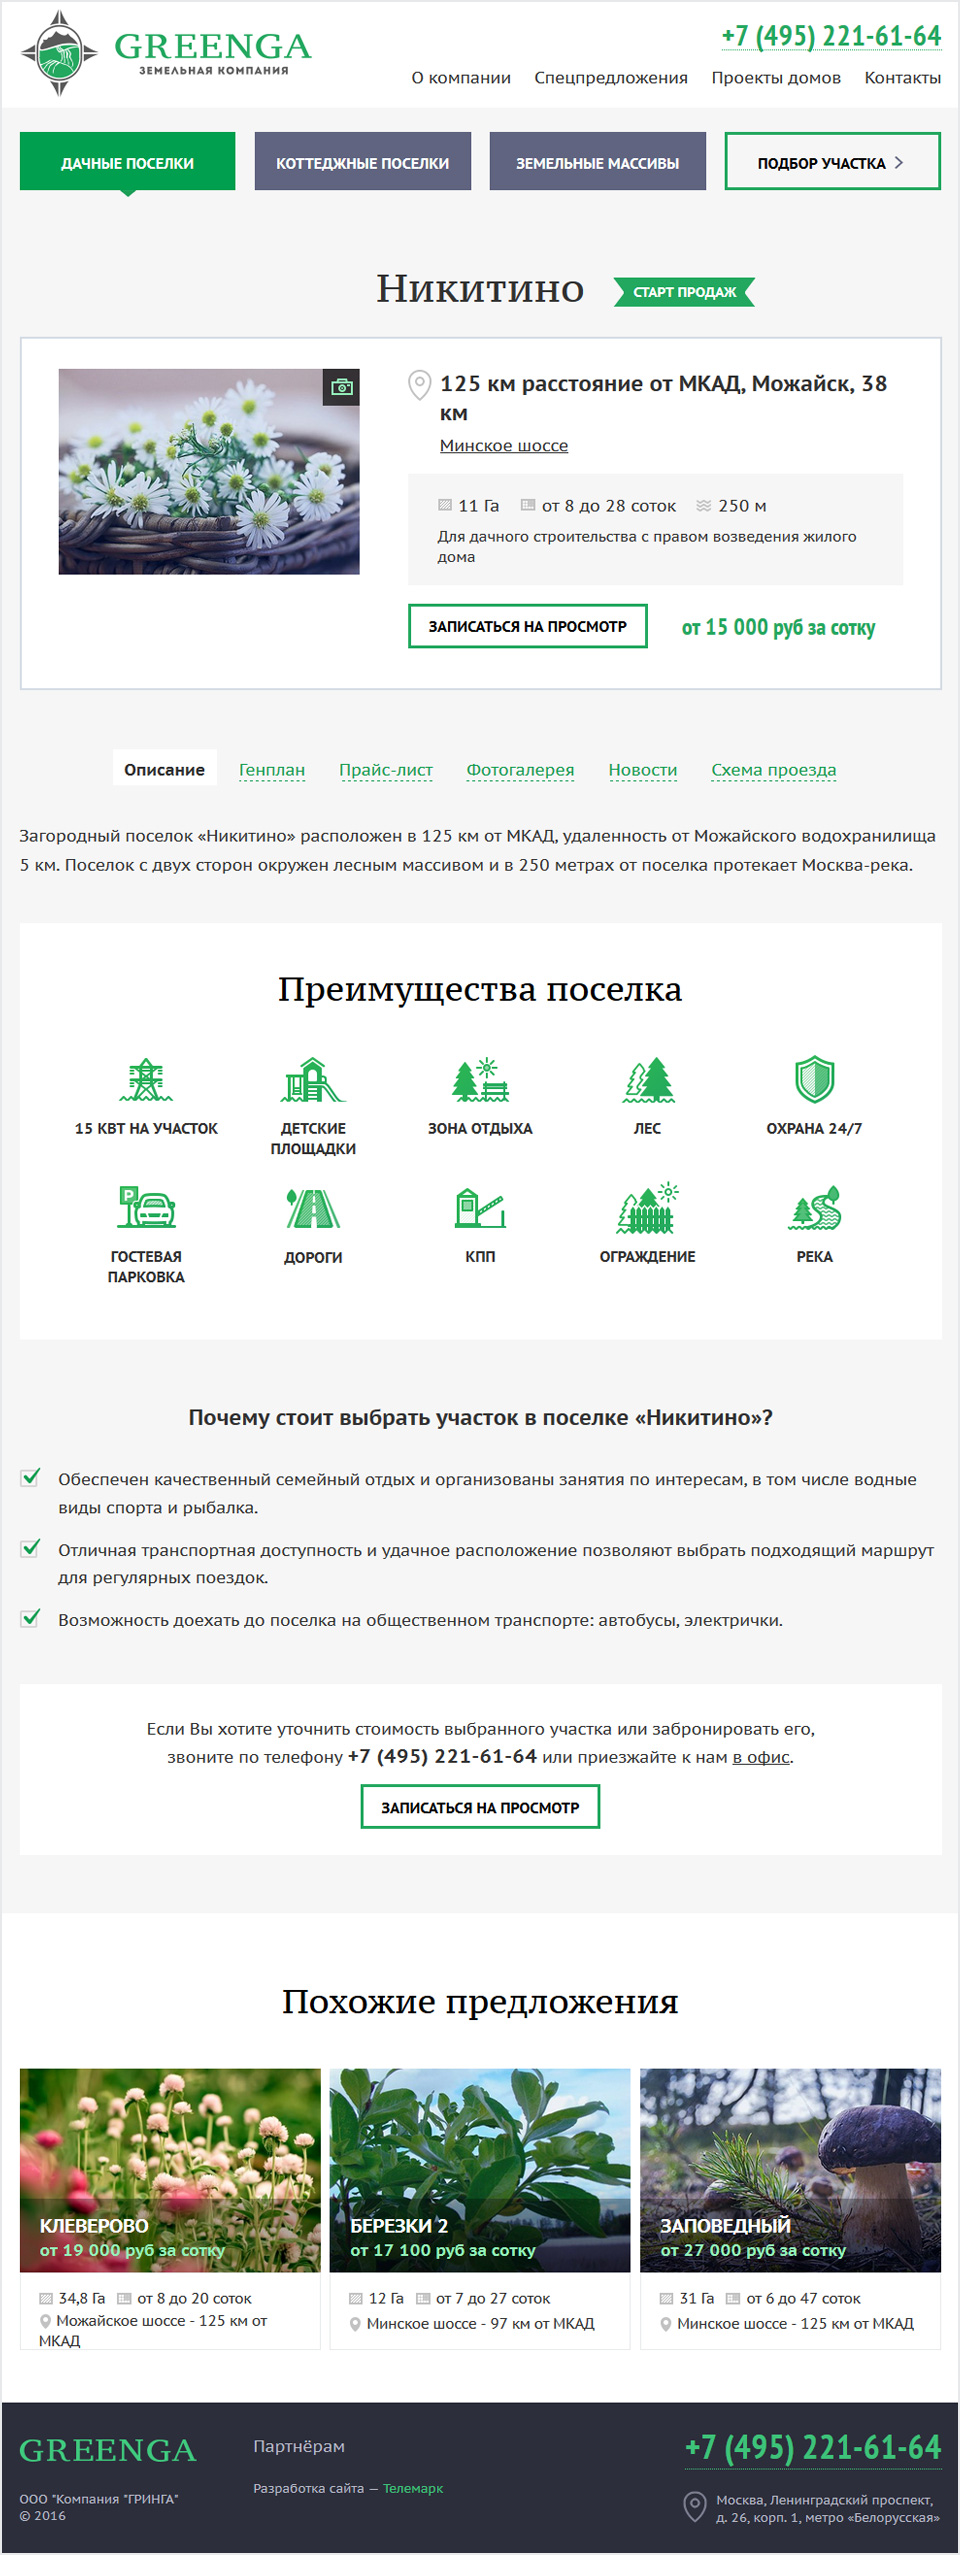 Сайт компании Гринга greenga.ru